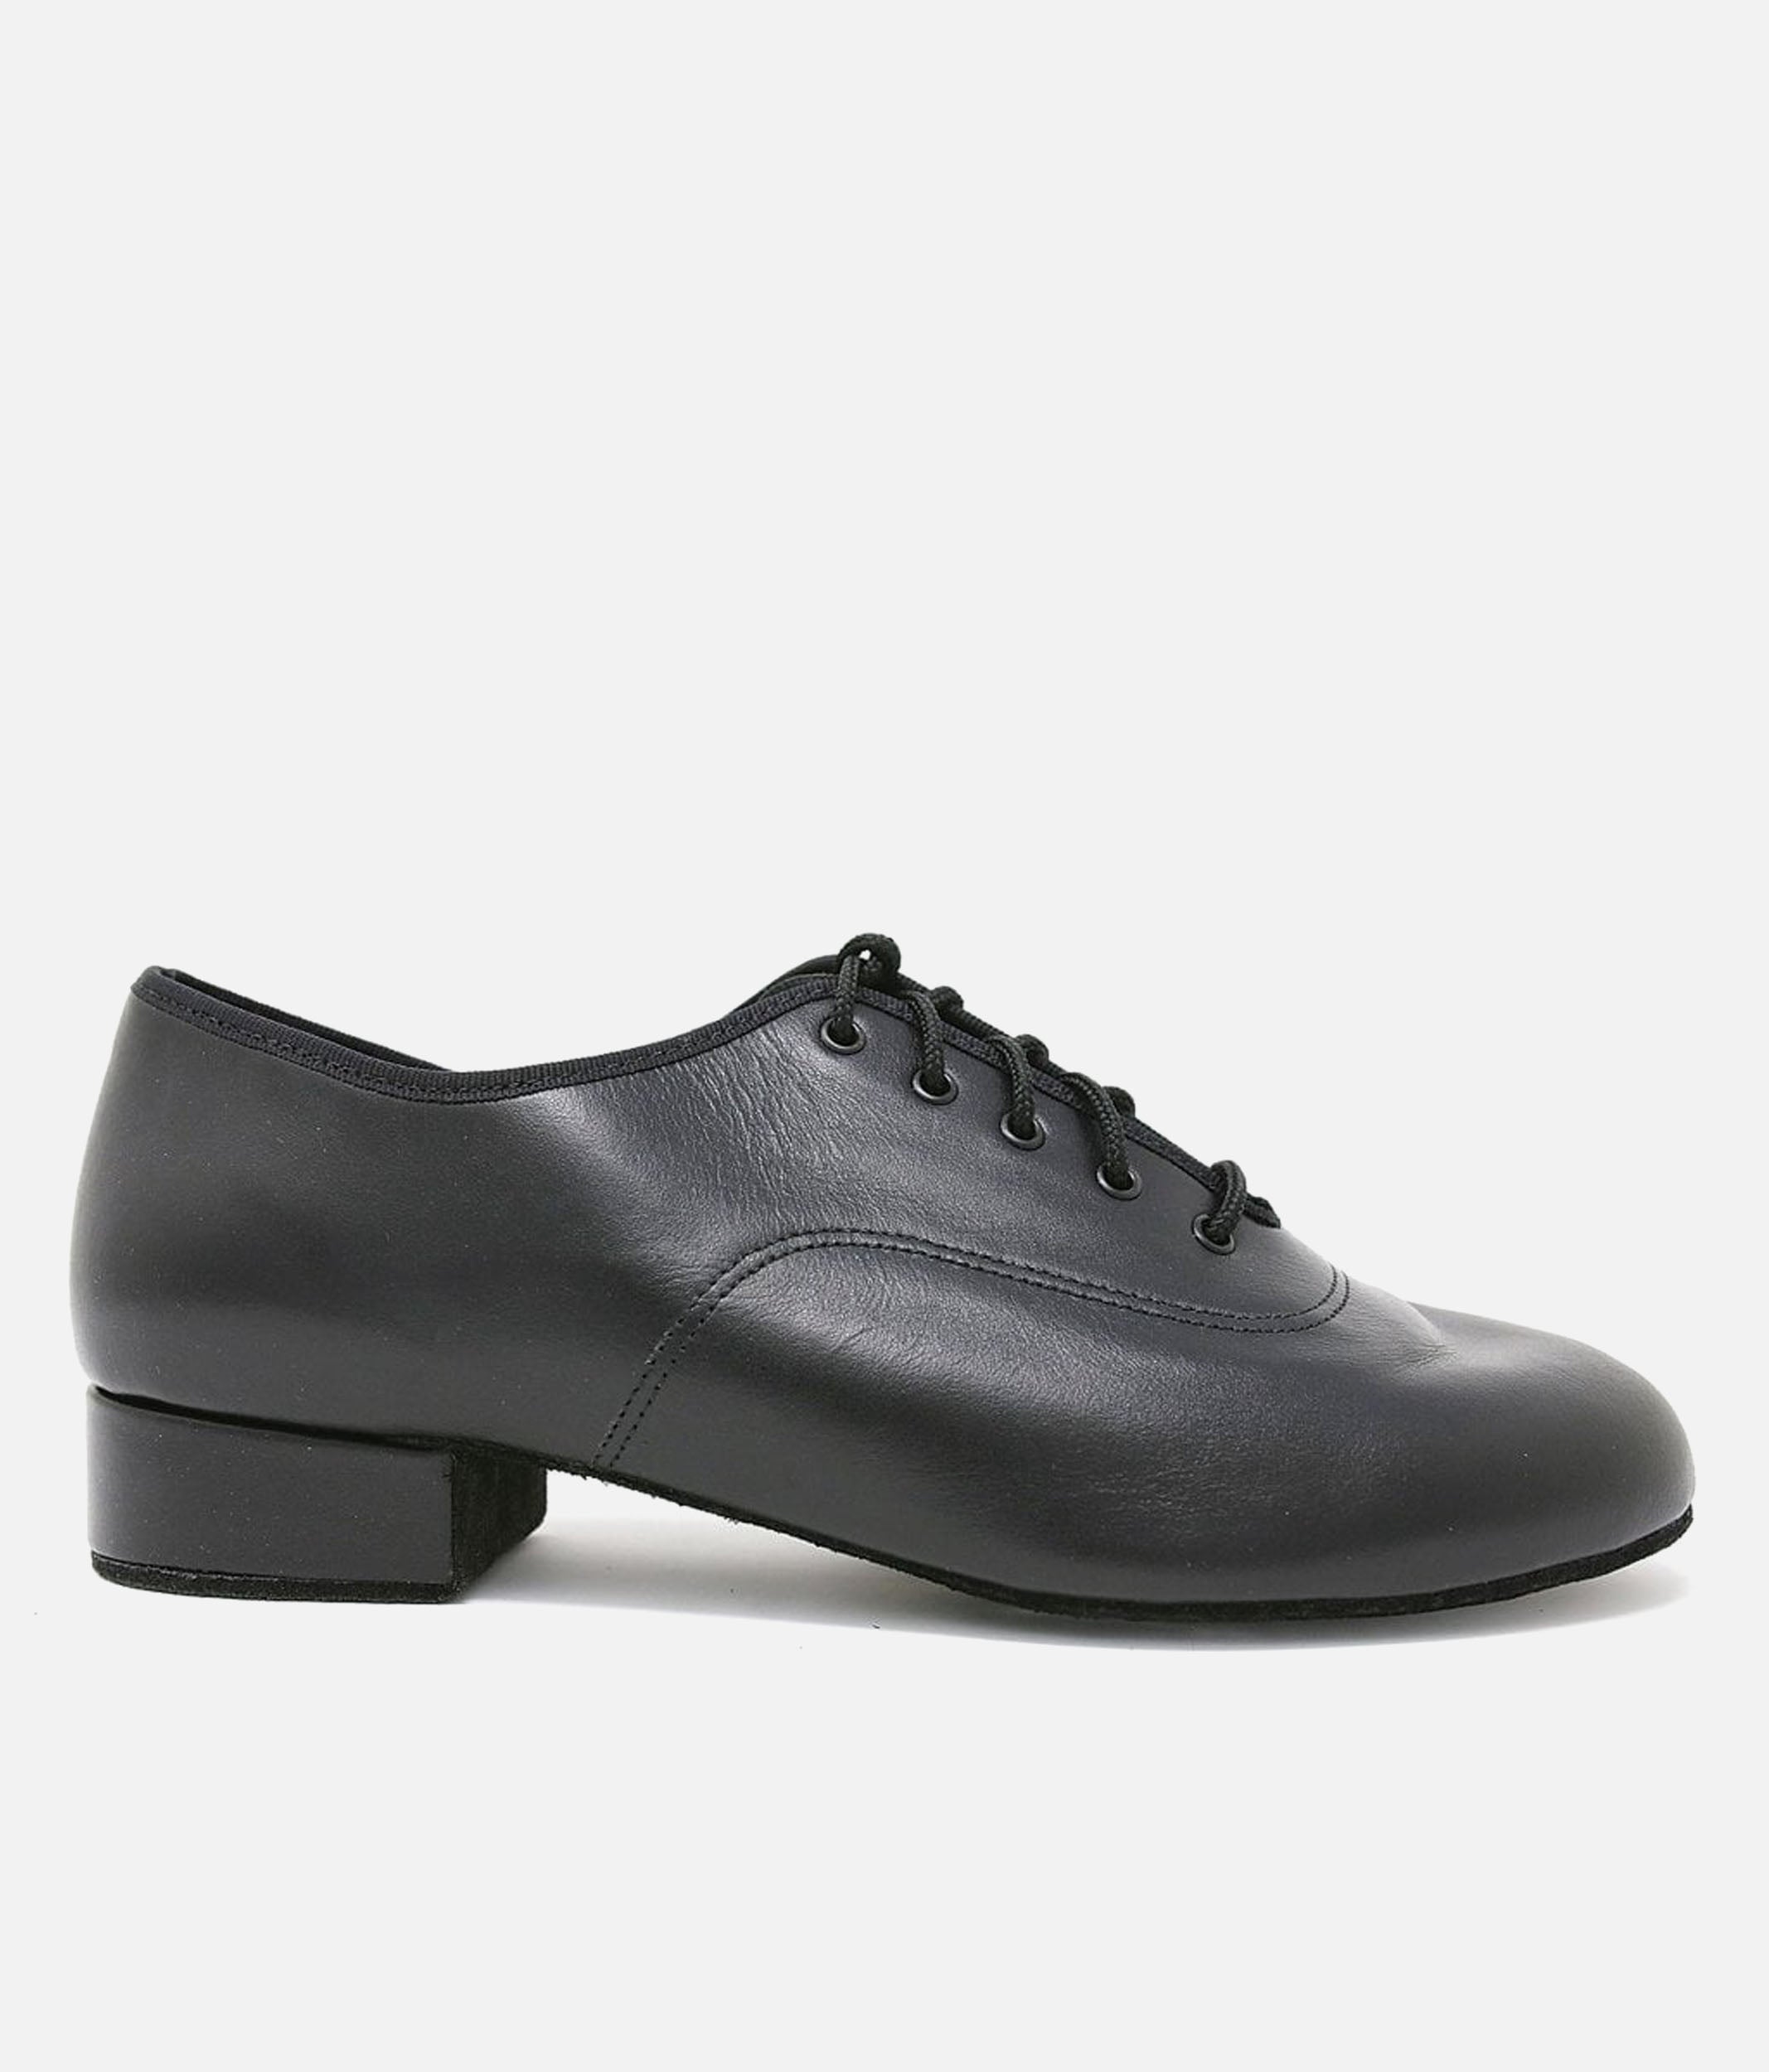 Men's Oxford Style Ballroom Shoes - Jun MLB